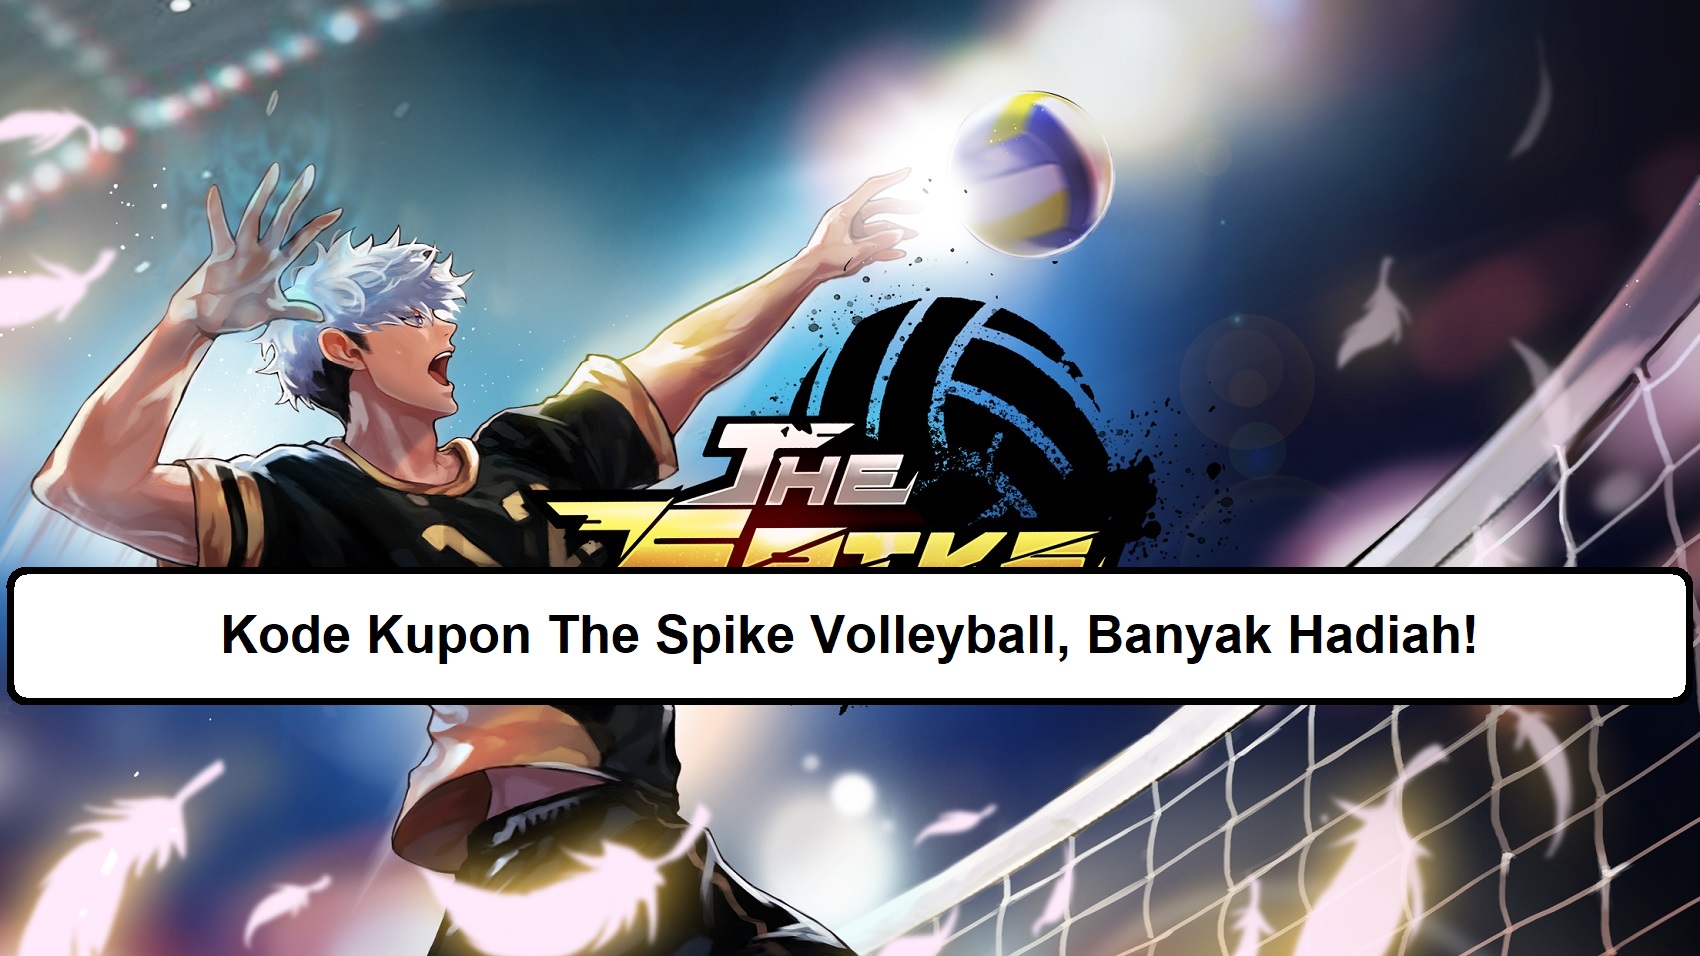 Kode Kupon The Spike Volleyball, Banyak Hadiah!